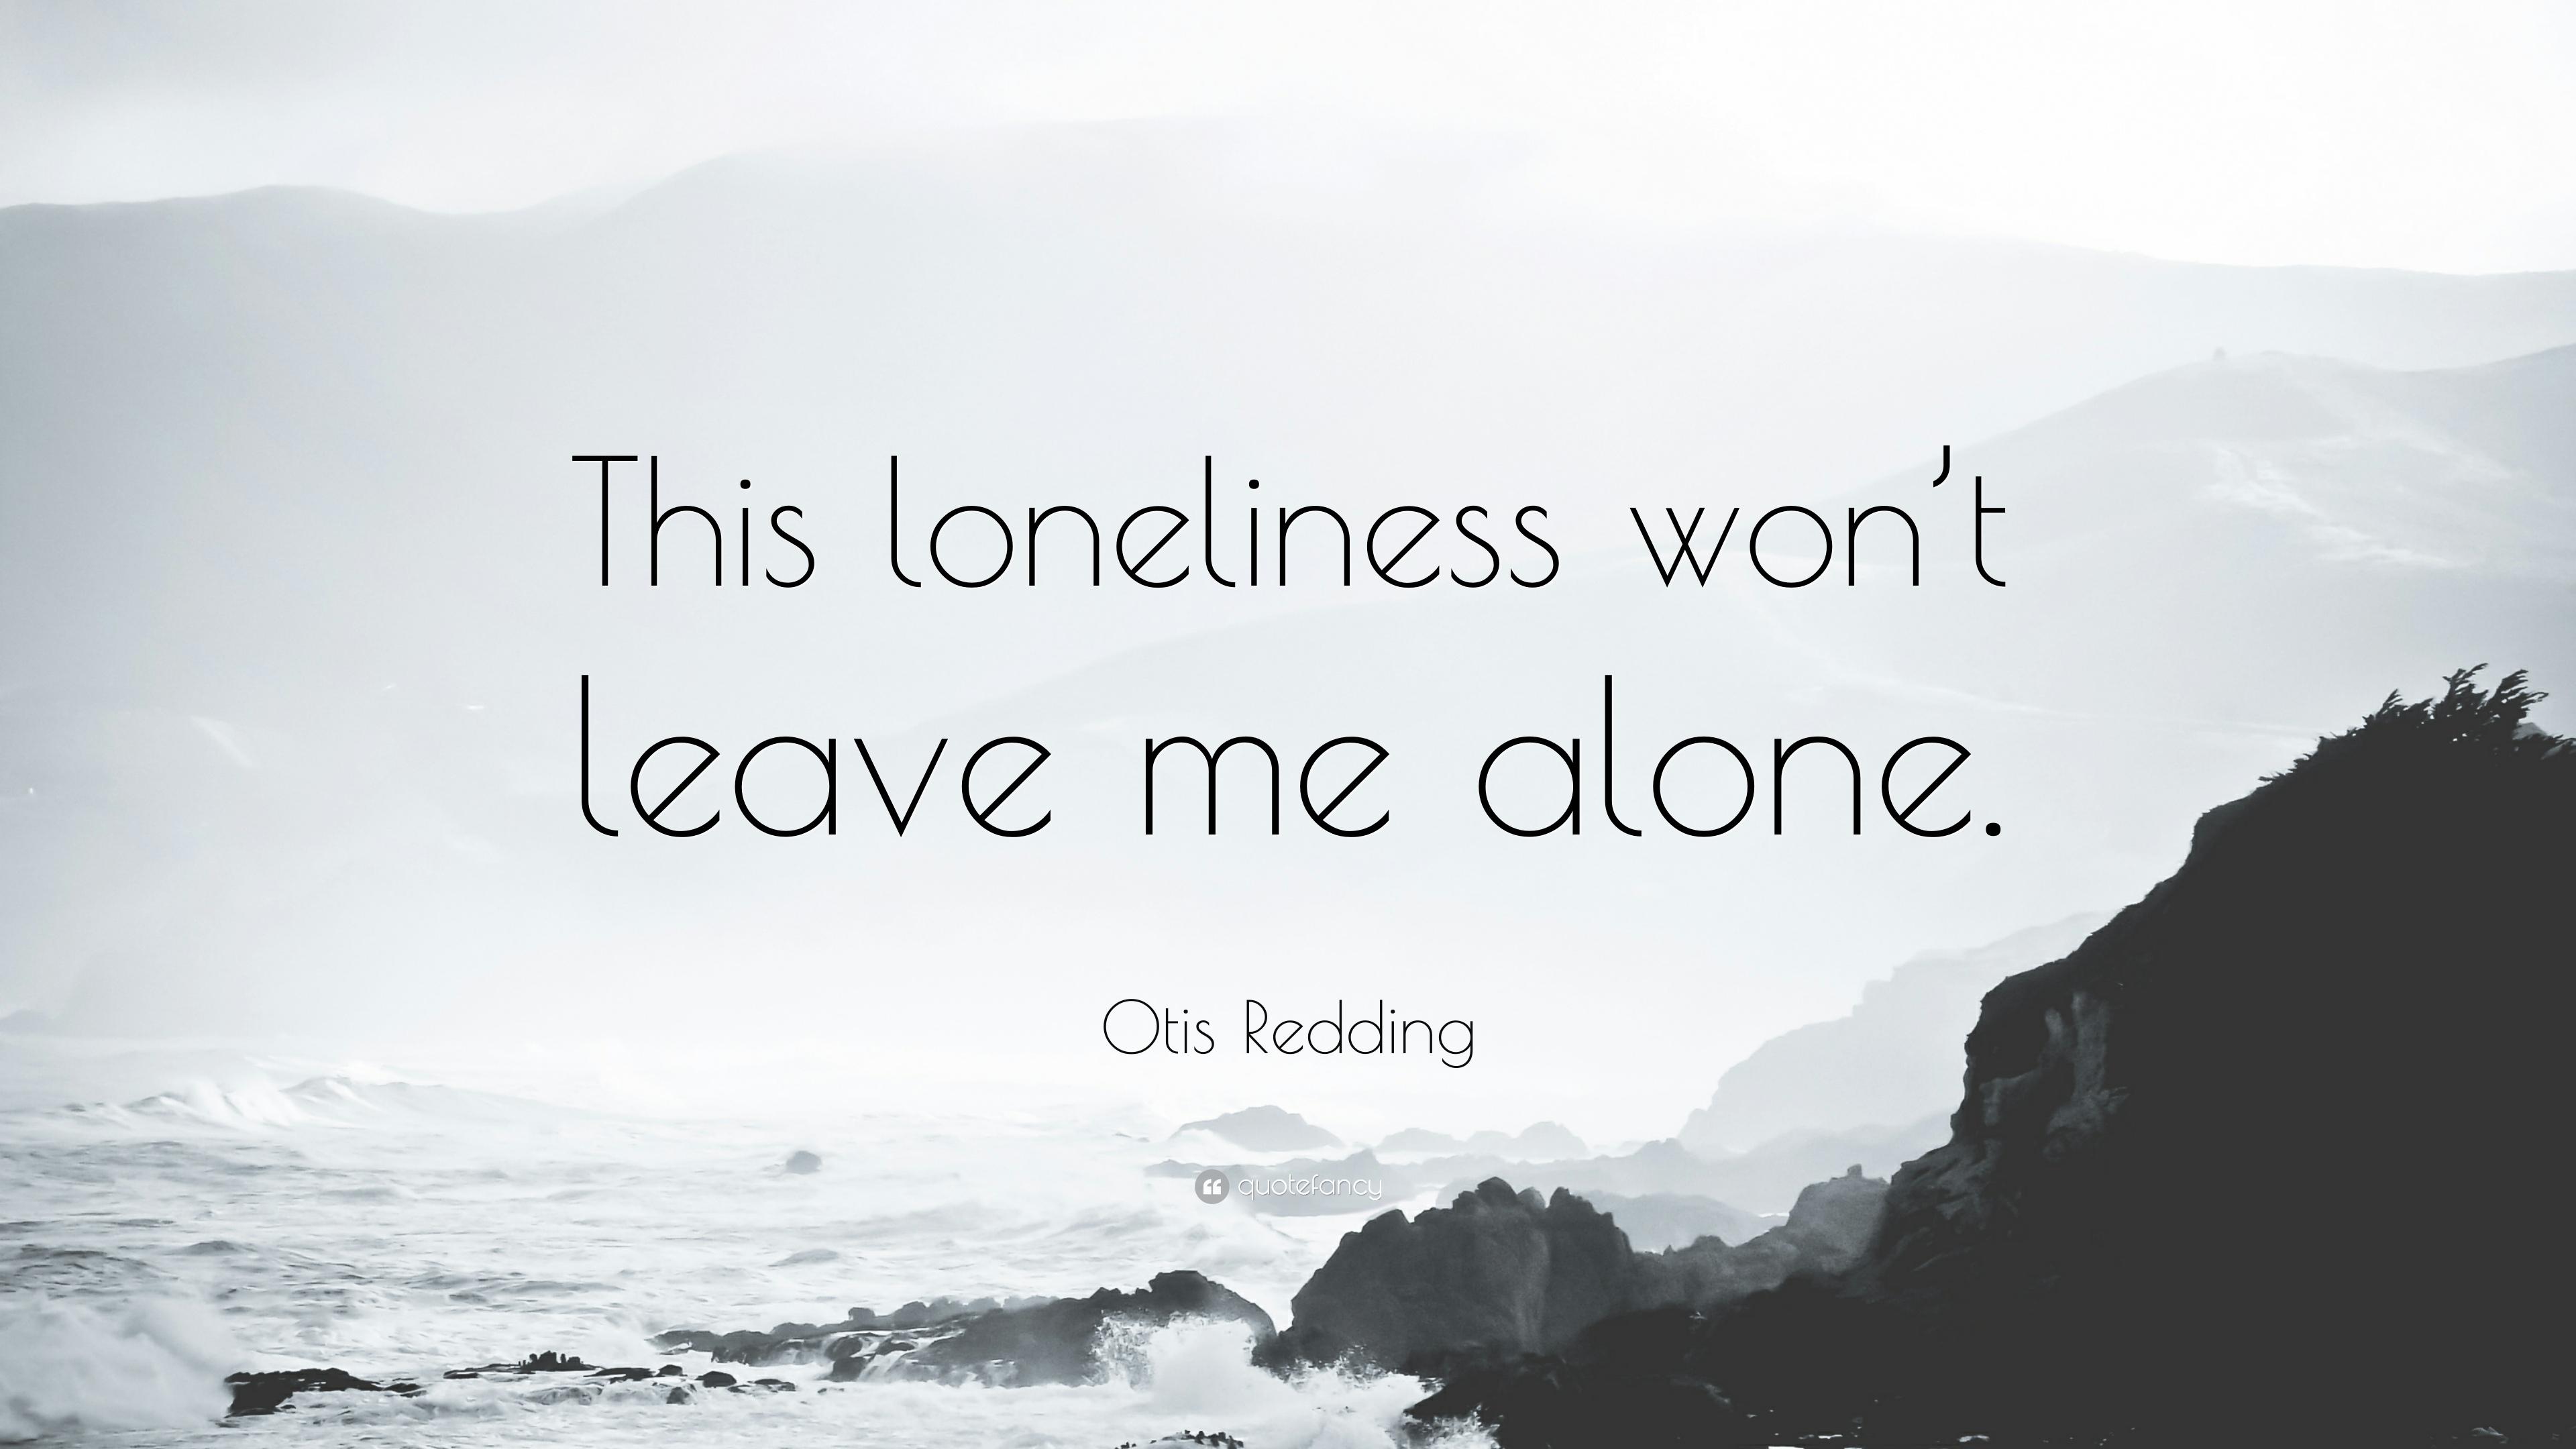 Otis Redding Quote: “This loneliness won't leave me alone.” 7